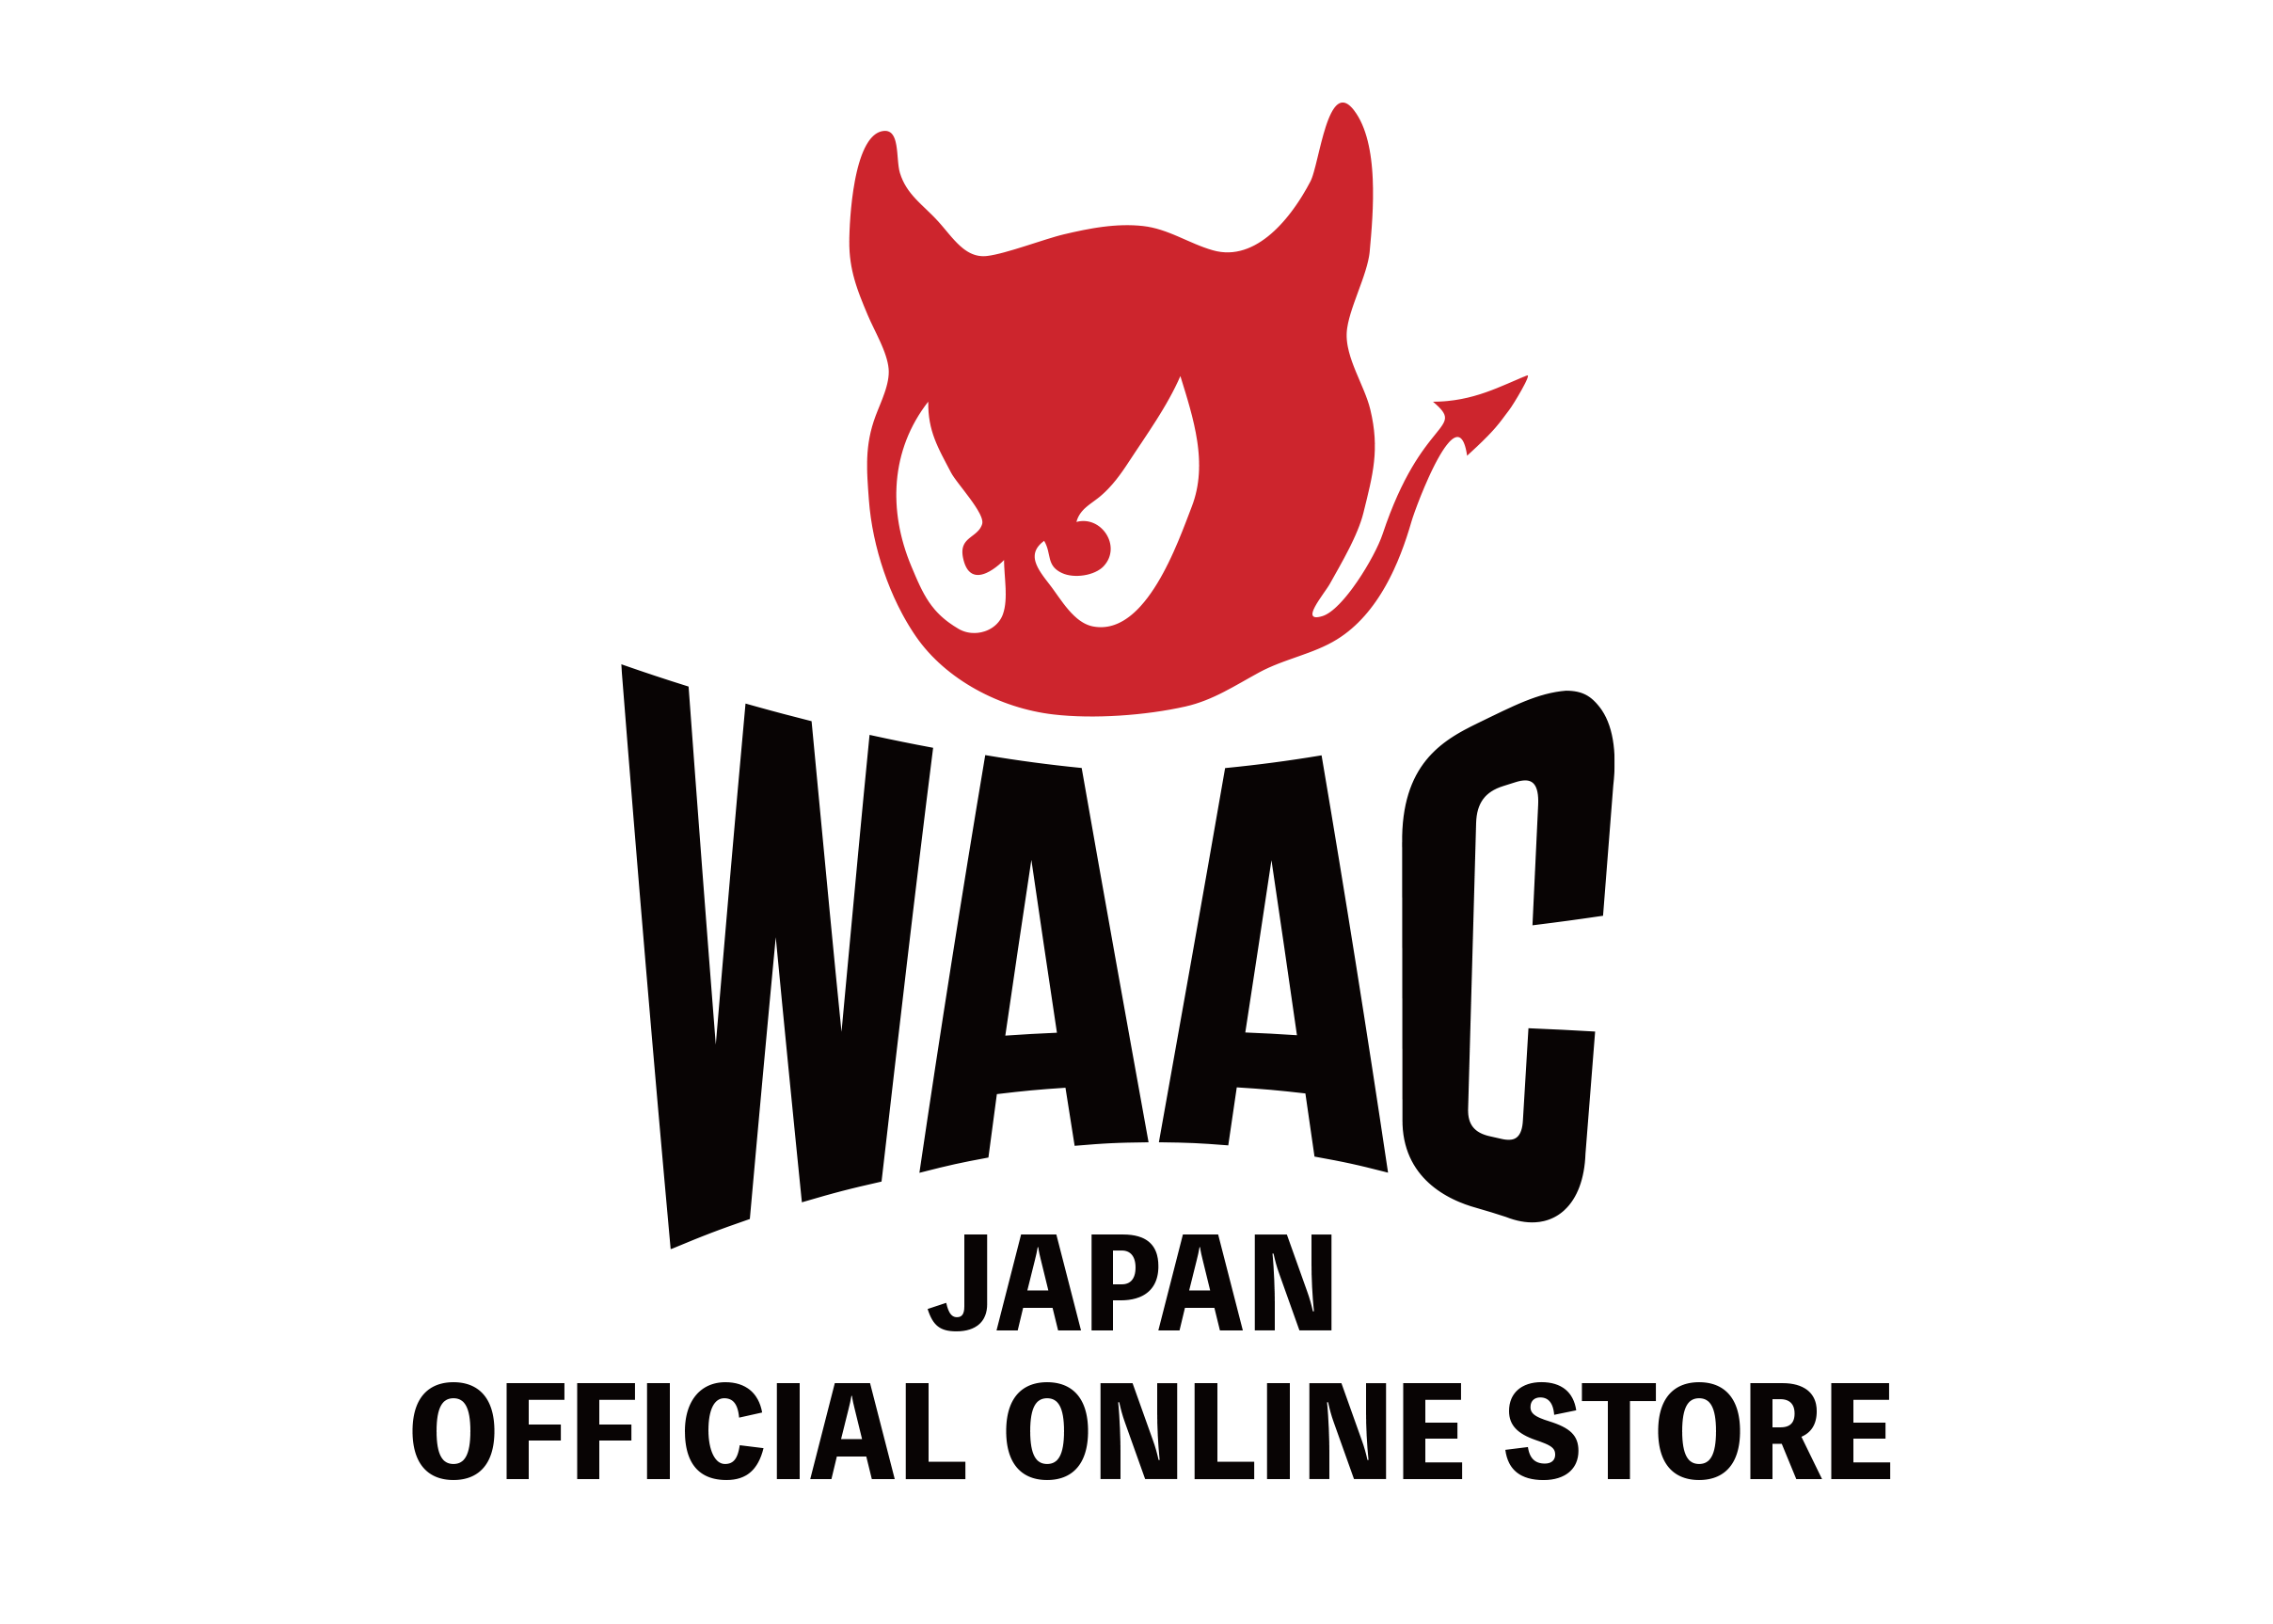 WAAC JAPAN公式オンラインストア